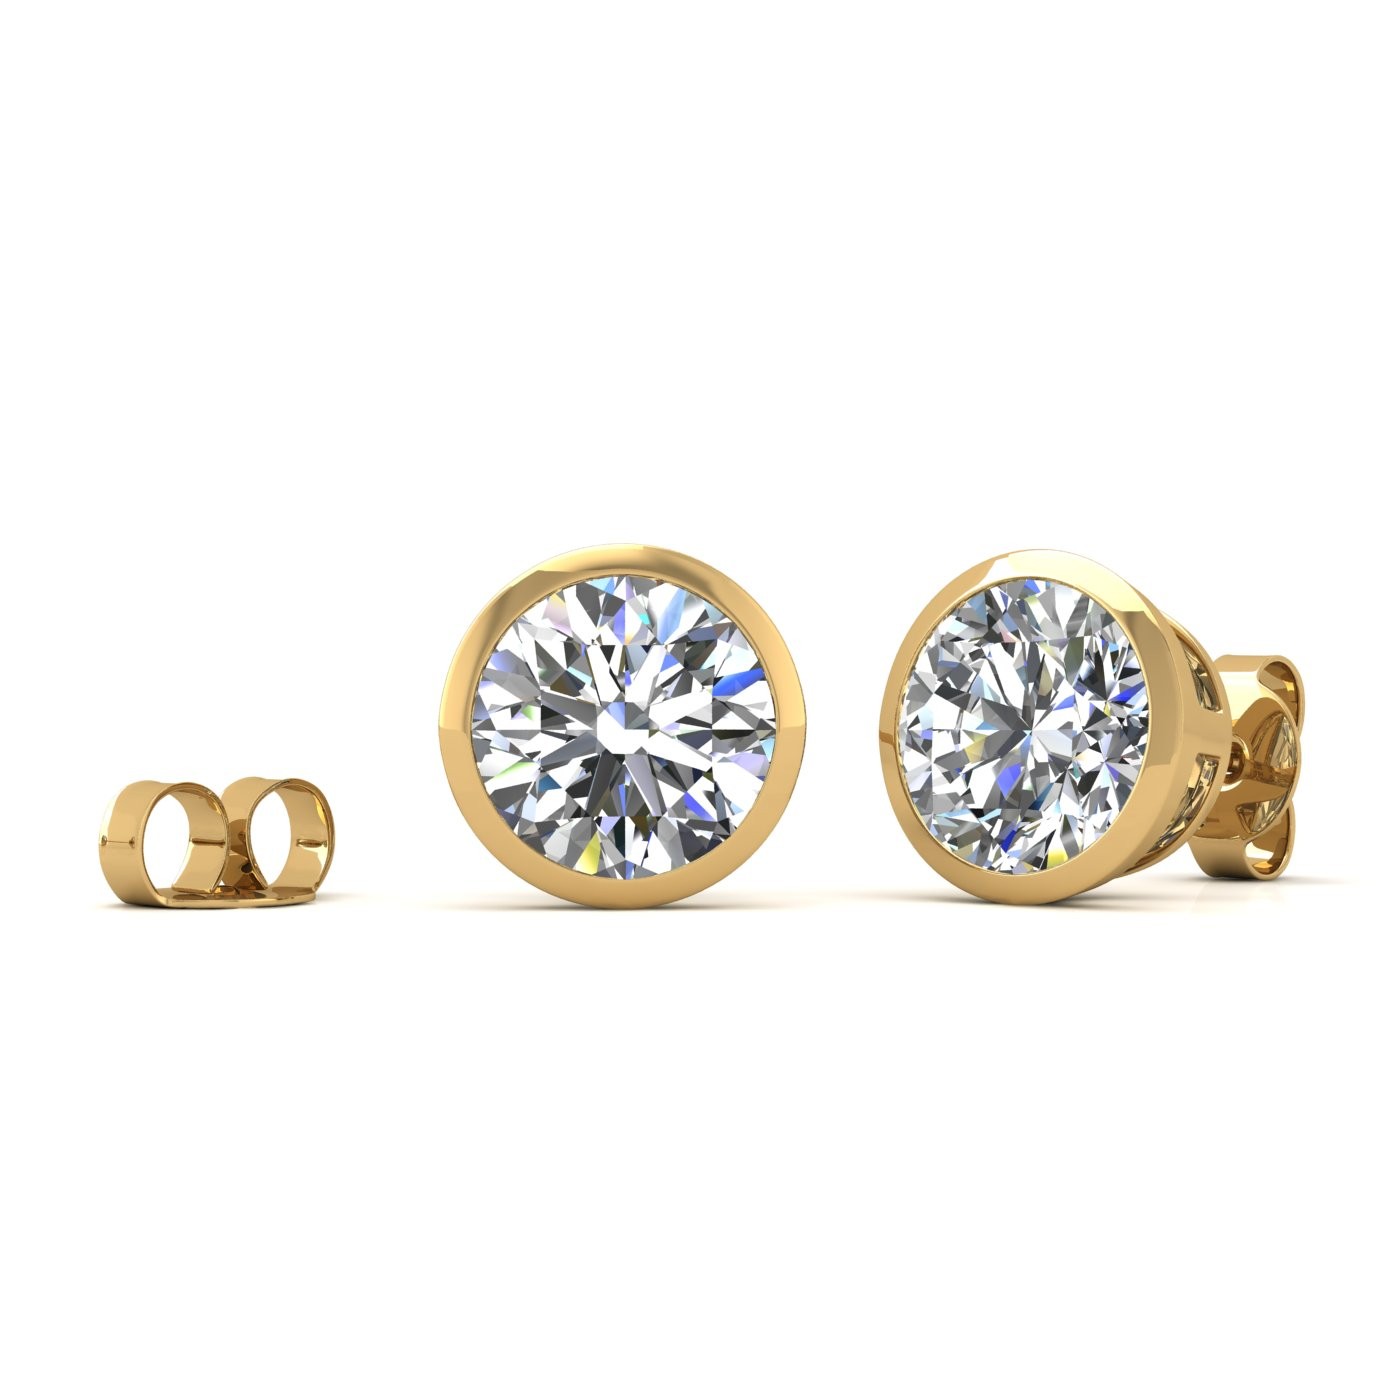 18k yellow gold 0,5 ct each (1,0 tcw) round brilliant cut diamond bezel set earring studs Photos & images